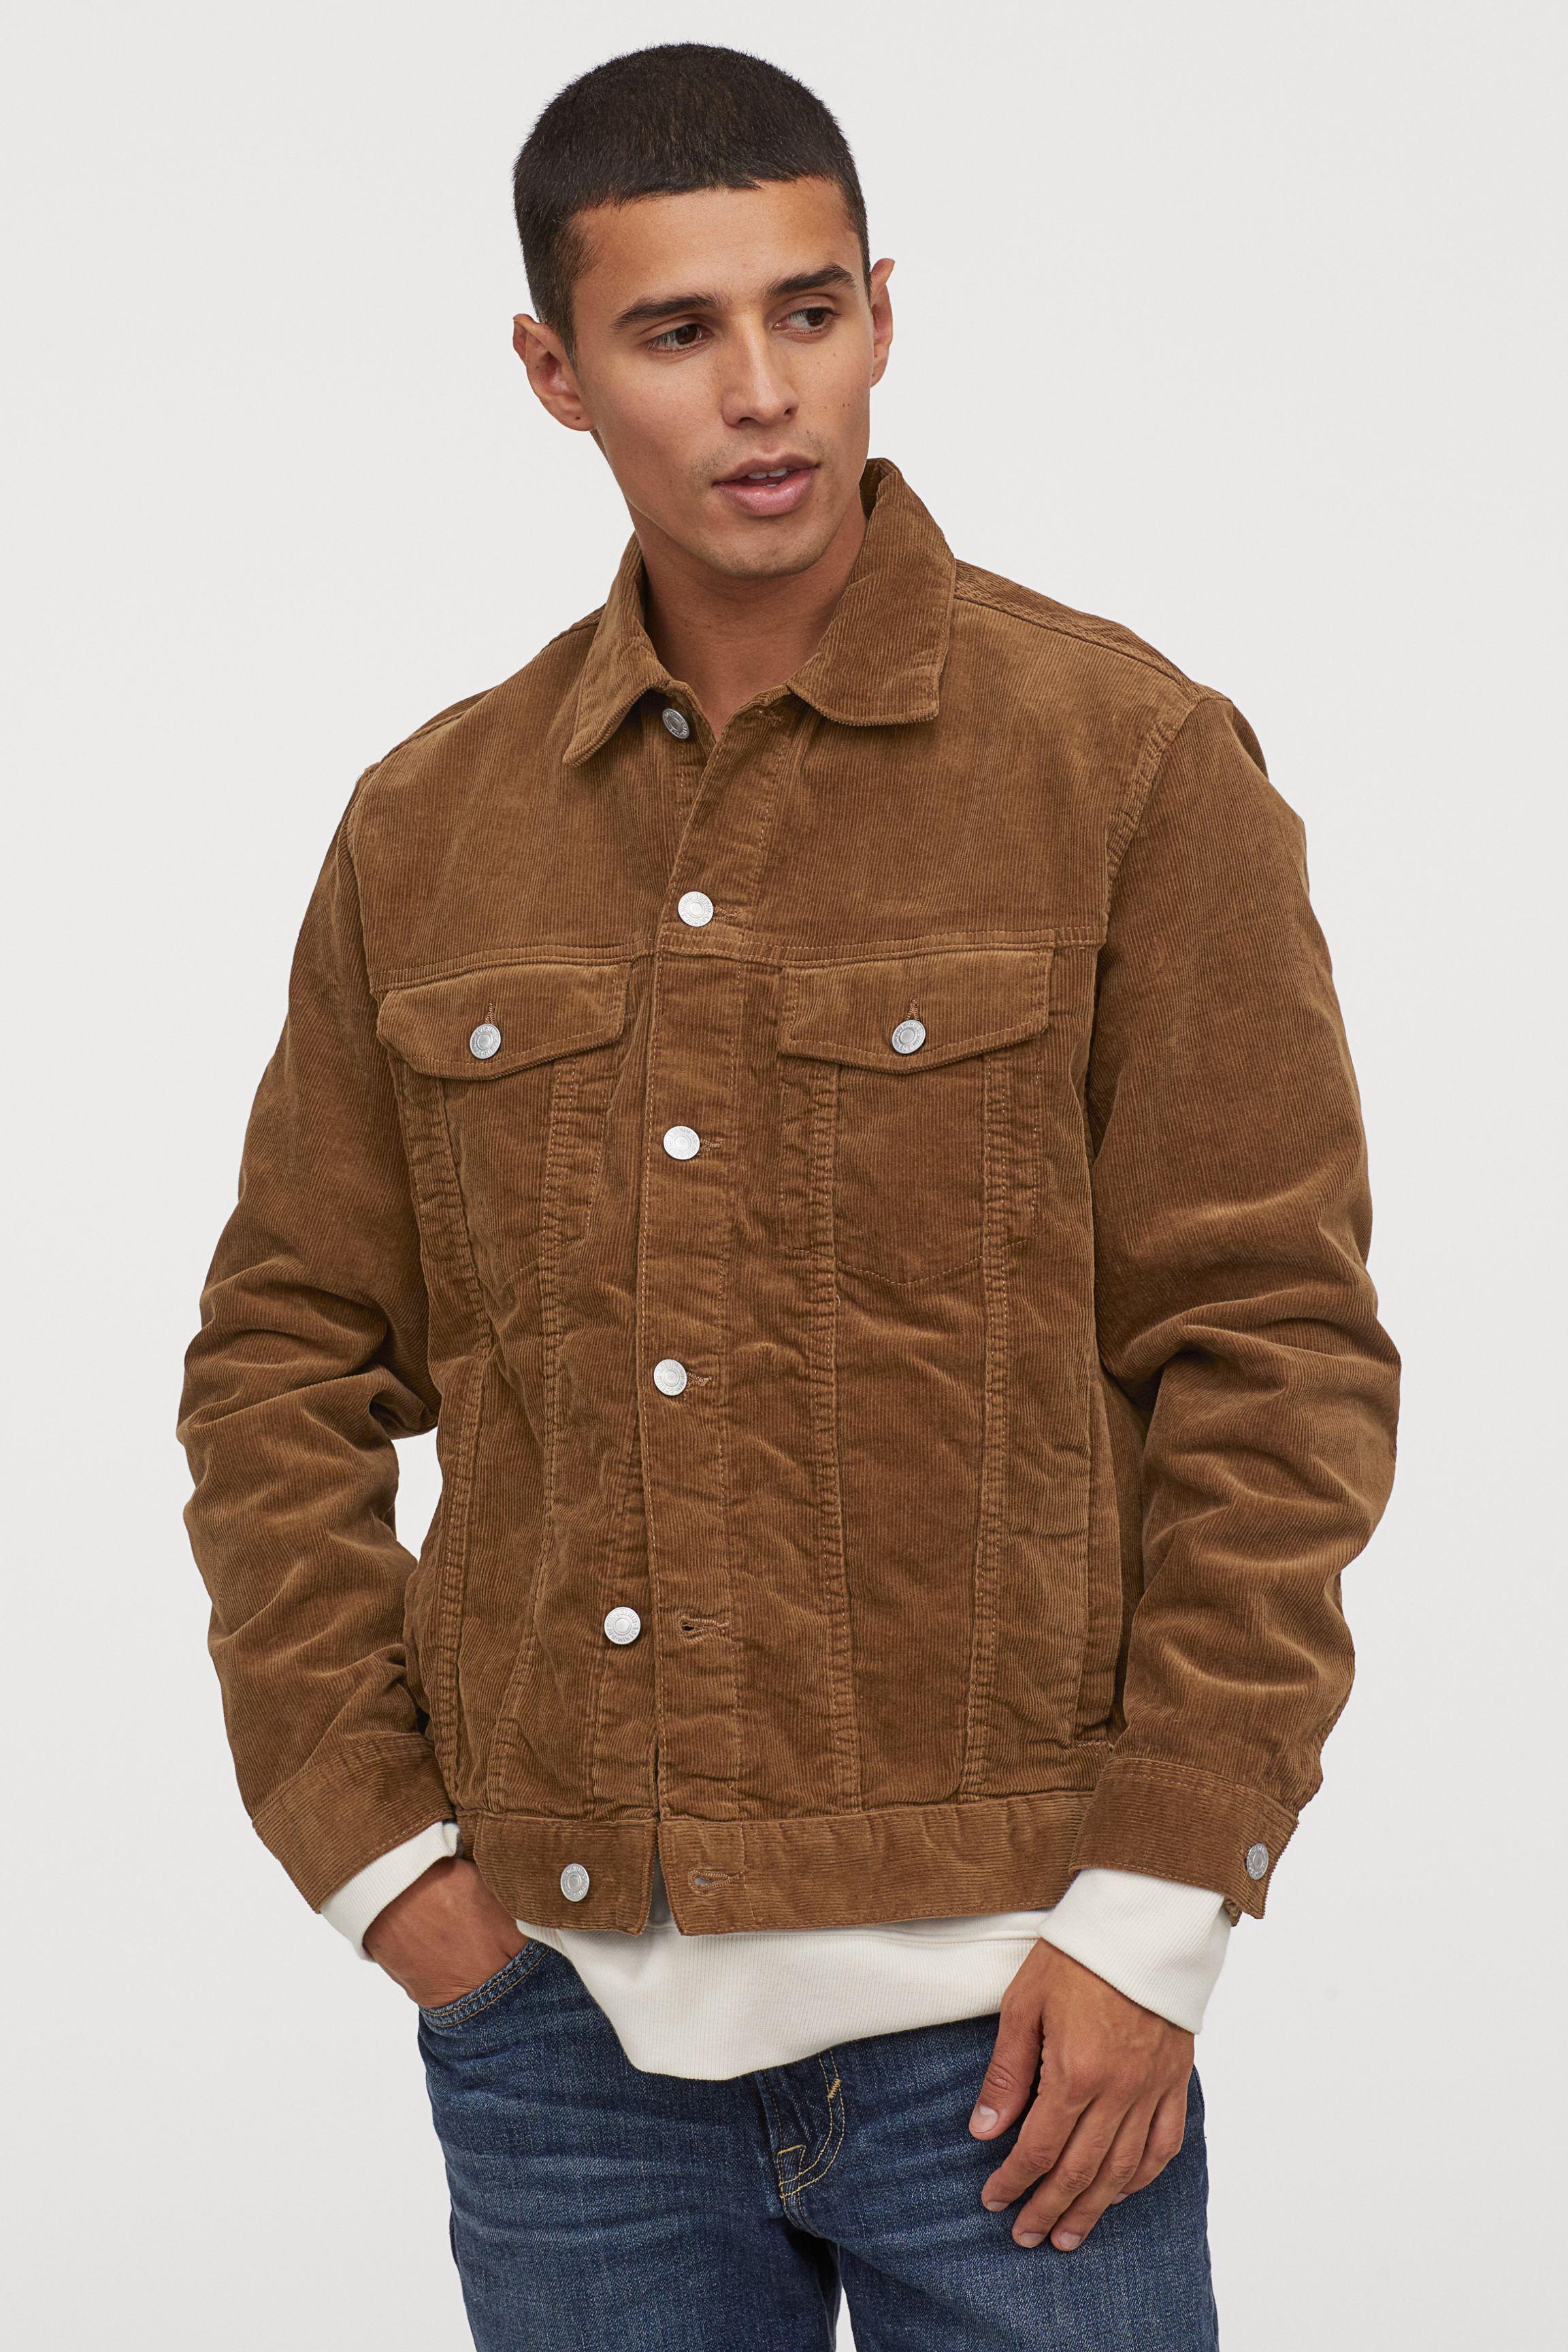 H&M Corduroy Jacket in Light Brown (Brown) for Men | Lyst